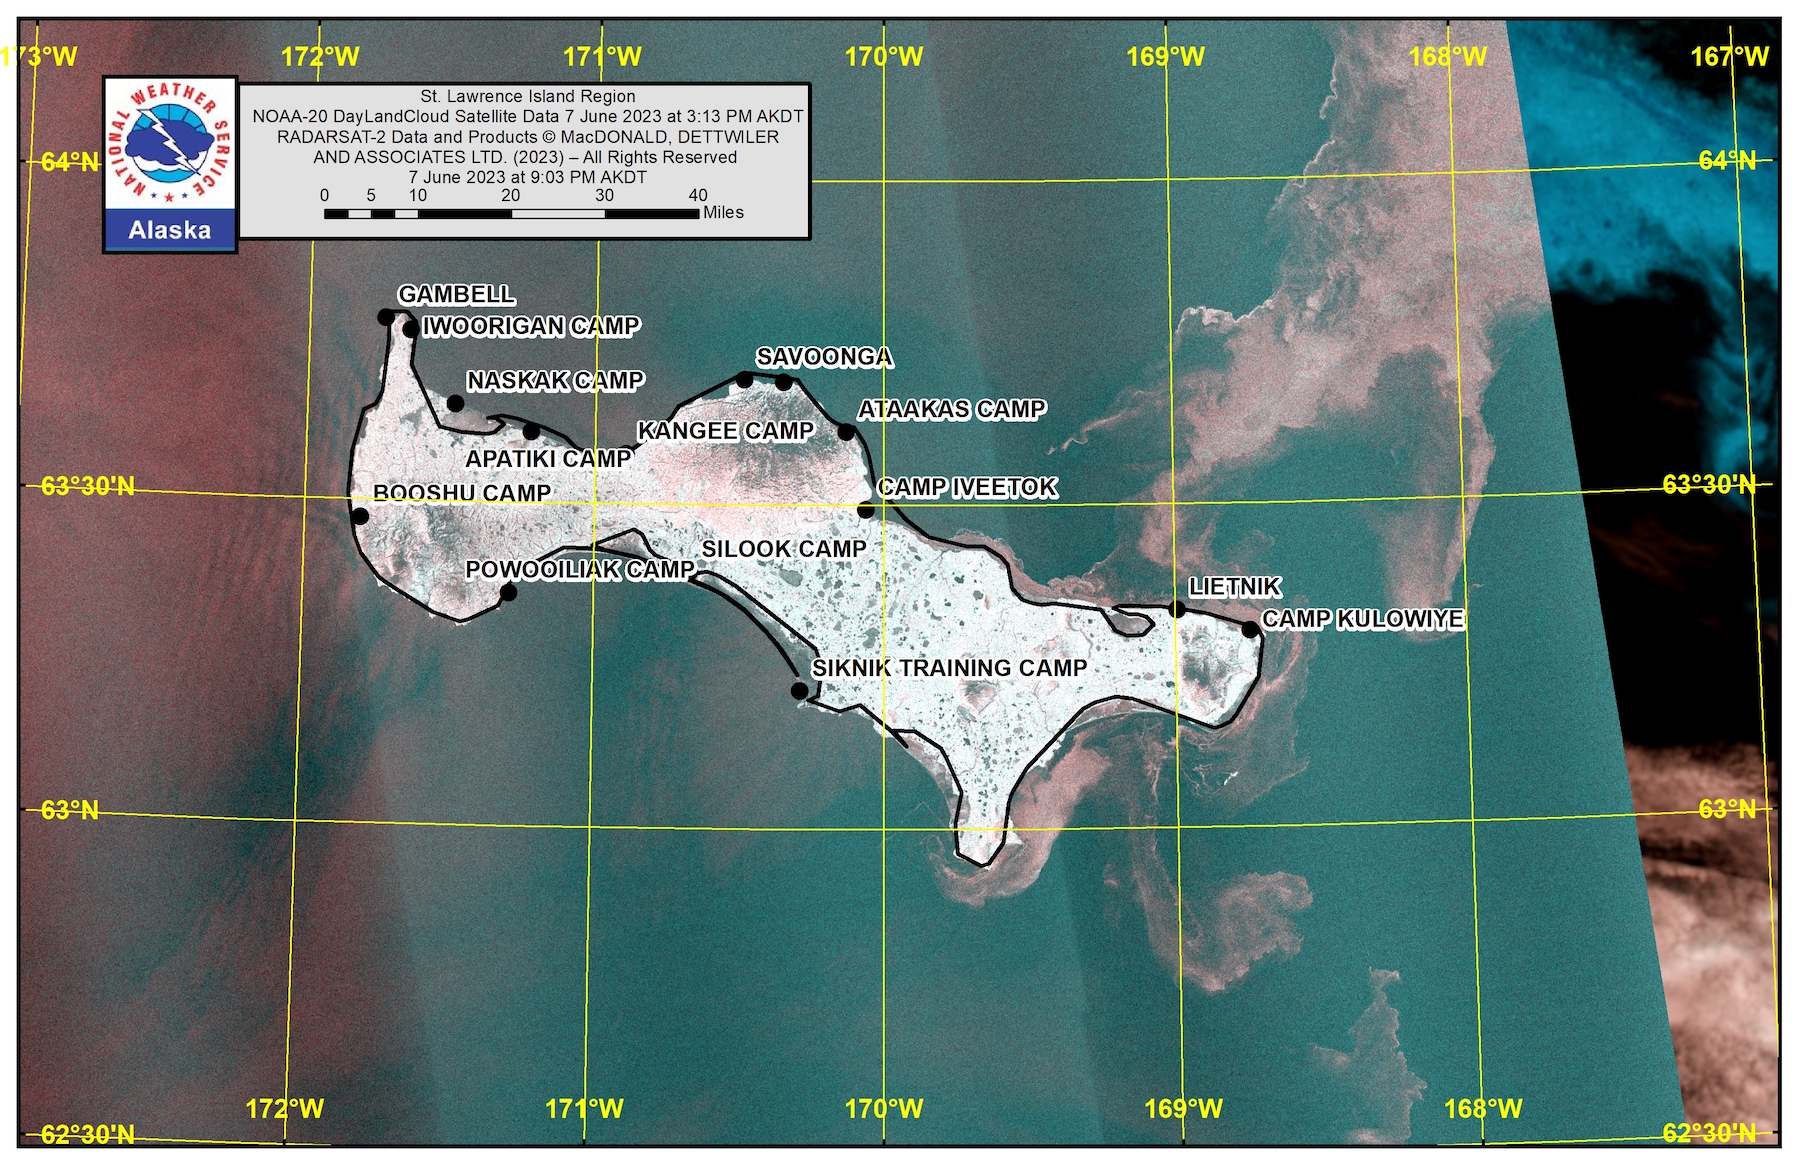 St. Lawrence Island Area Satellite Image